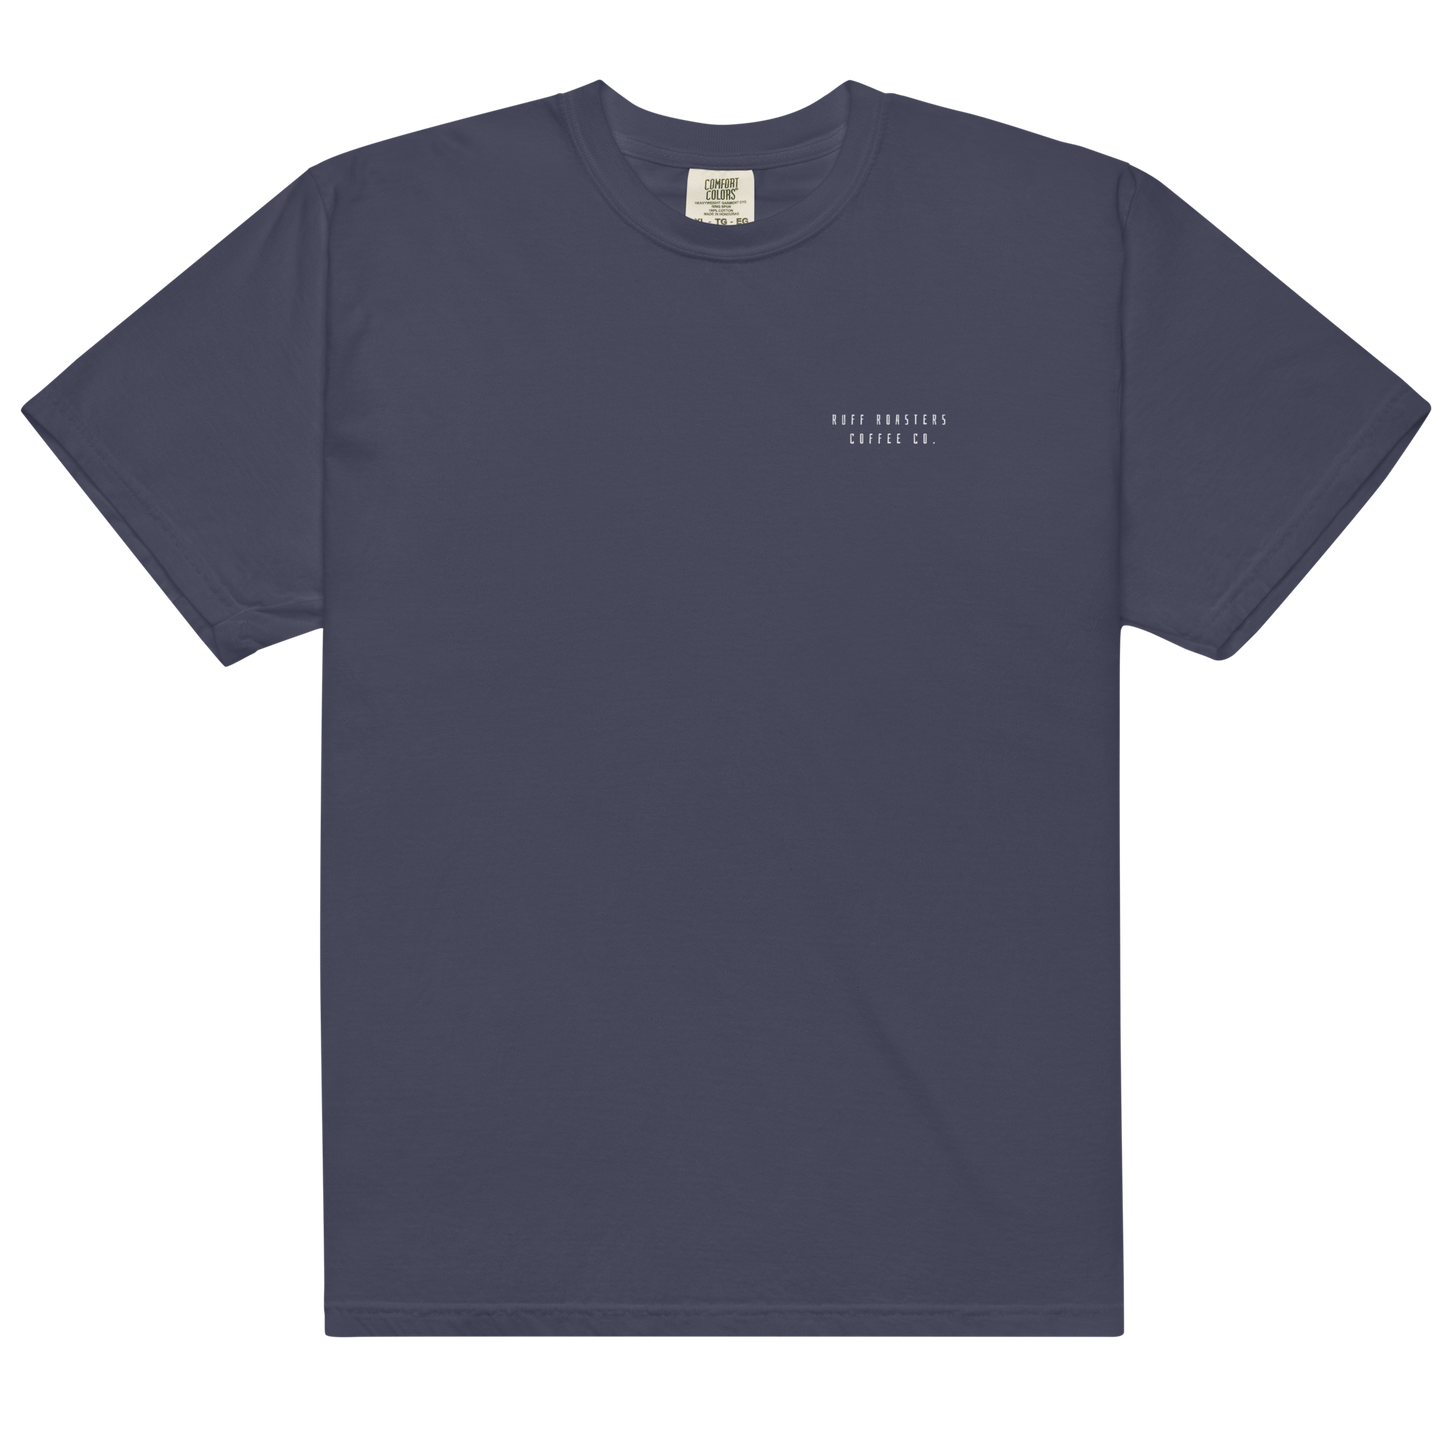 Good Boy Gang Premium Comfort Colors Heavyweight T-shirt - Ruff Roasters Coffee Co.